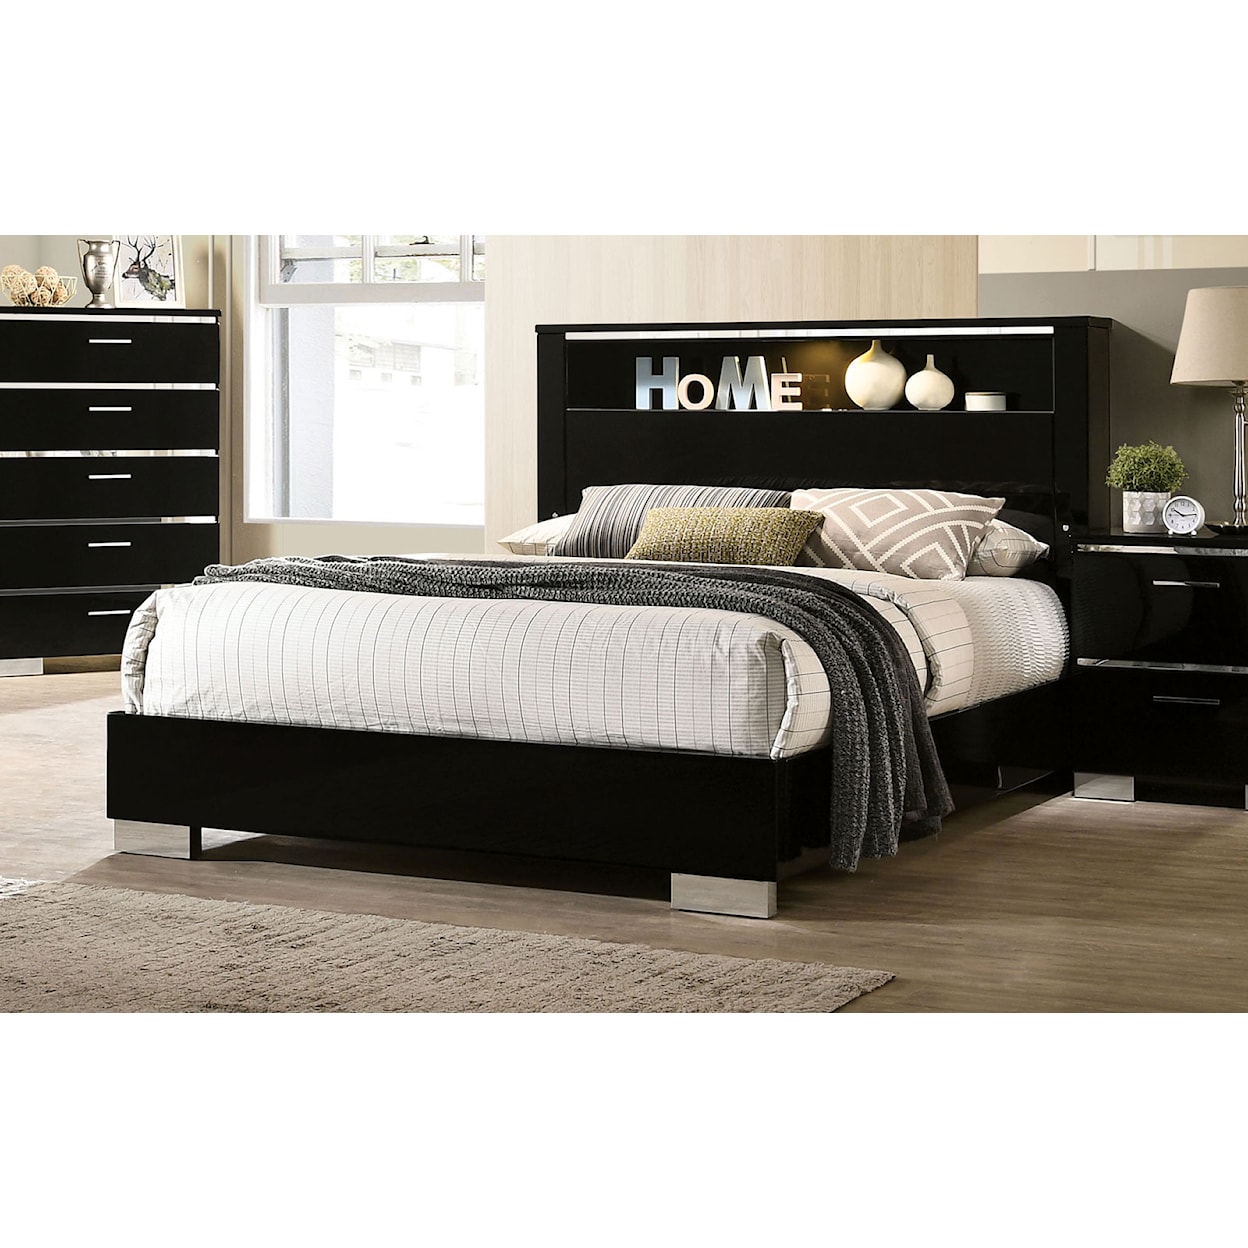 Furniture of America Carlie Queen Bed